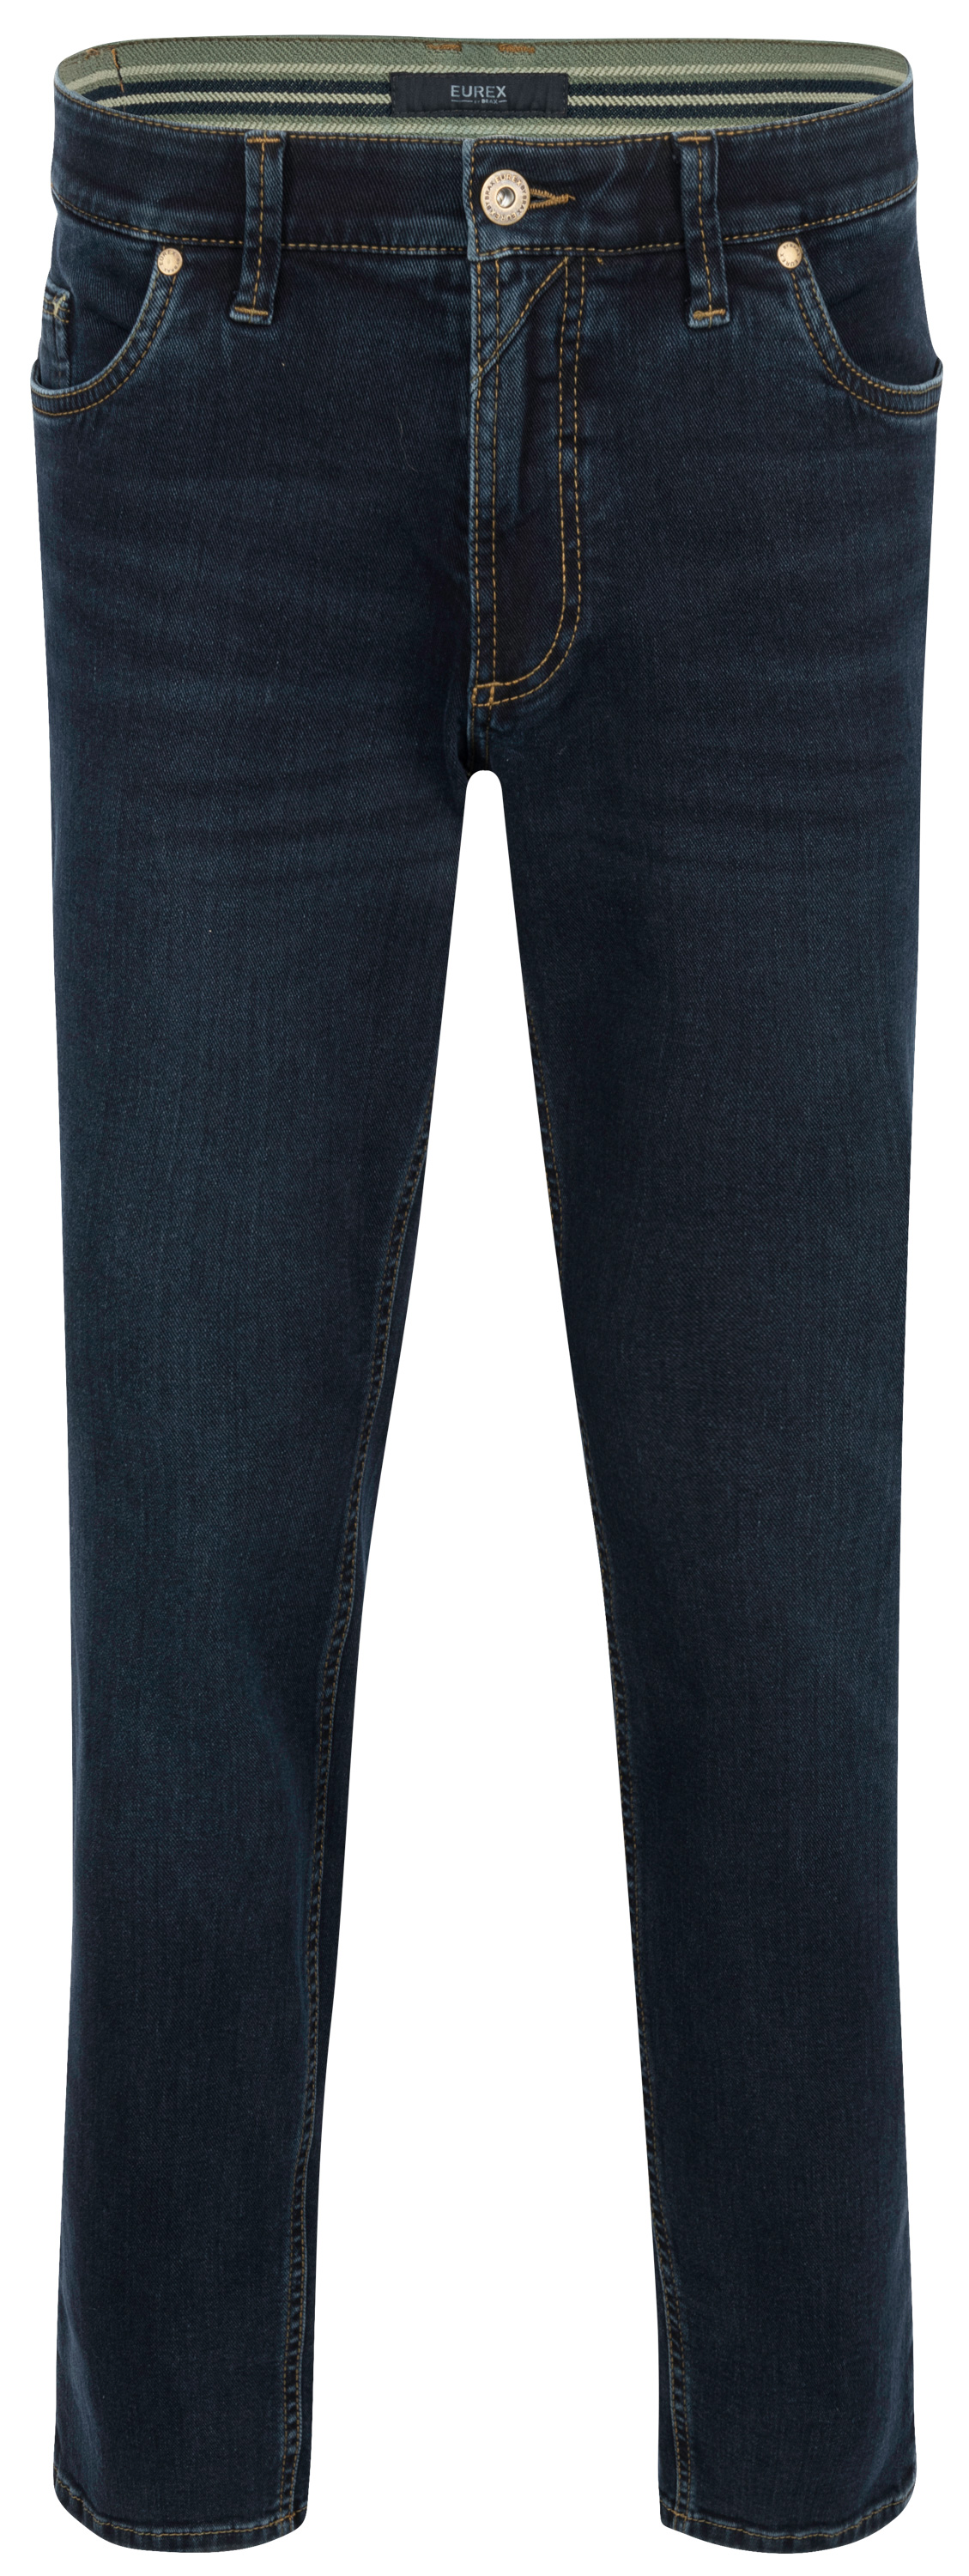 EUREX BY BRAX LUKE blau POWER - Jeans 51-6267-24 Jeans-Manufaktur | DENIM | Jeans Brax DENIM Männer | | 5939020 | Luke EUREX POWER